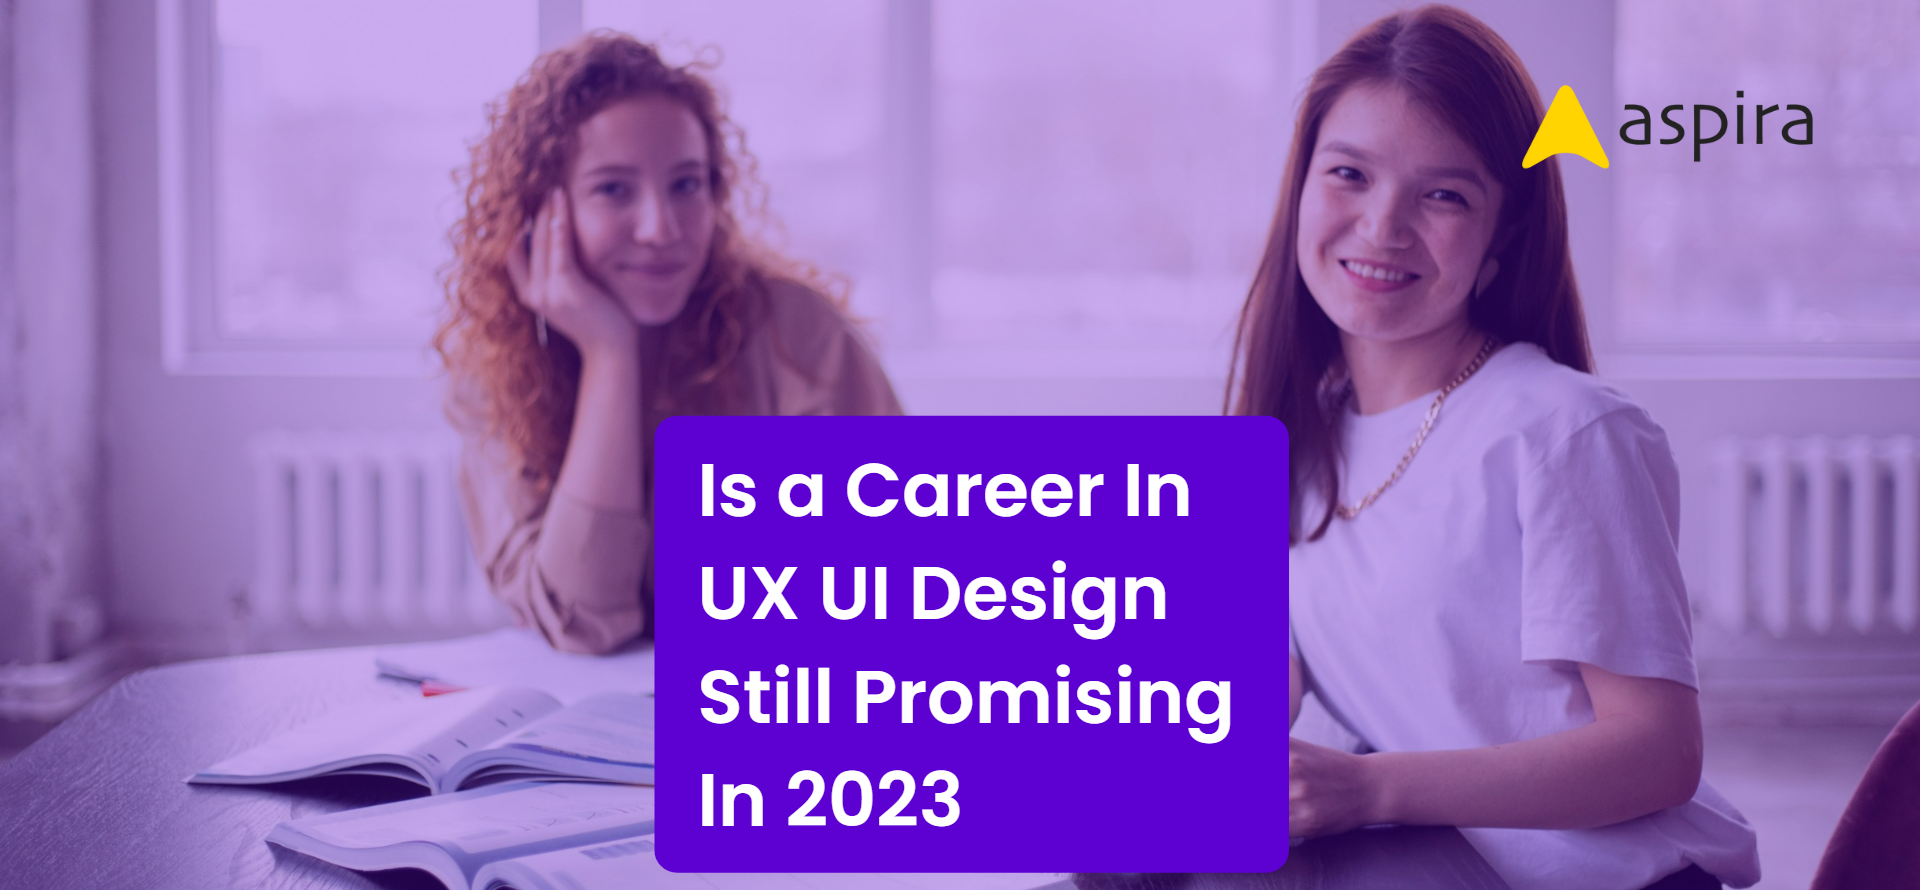 Is a career in UX UI design still promising in 2023